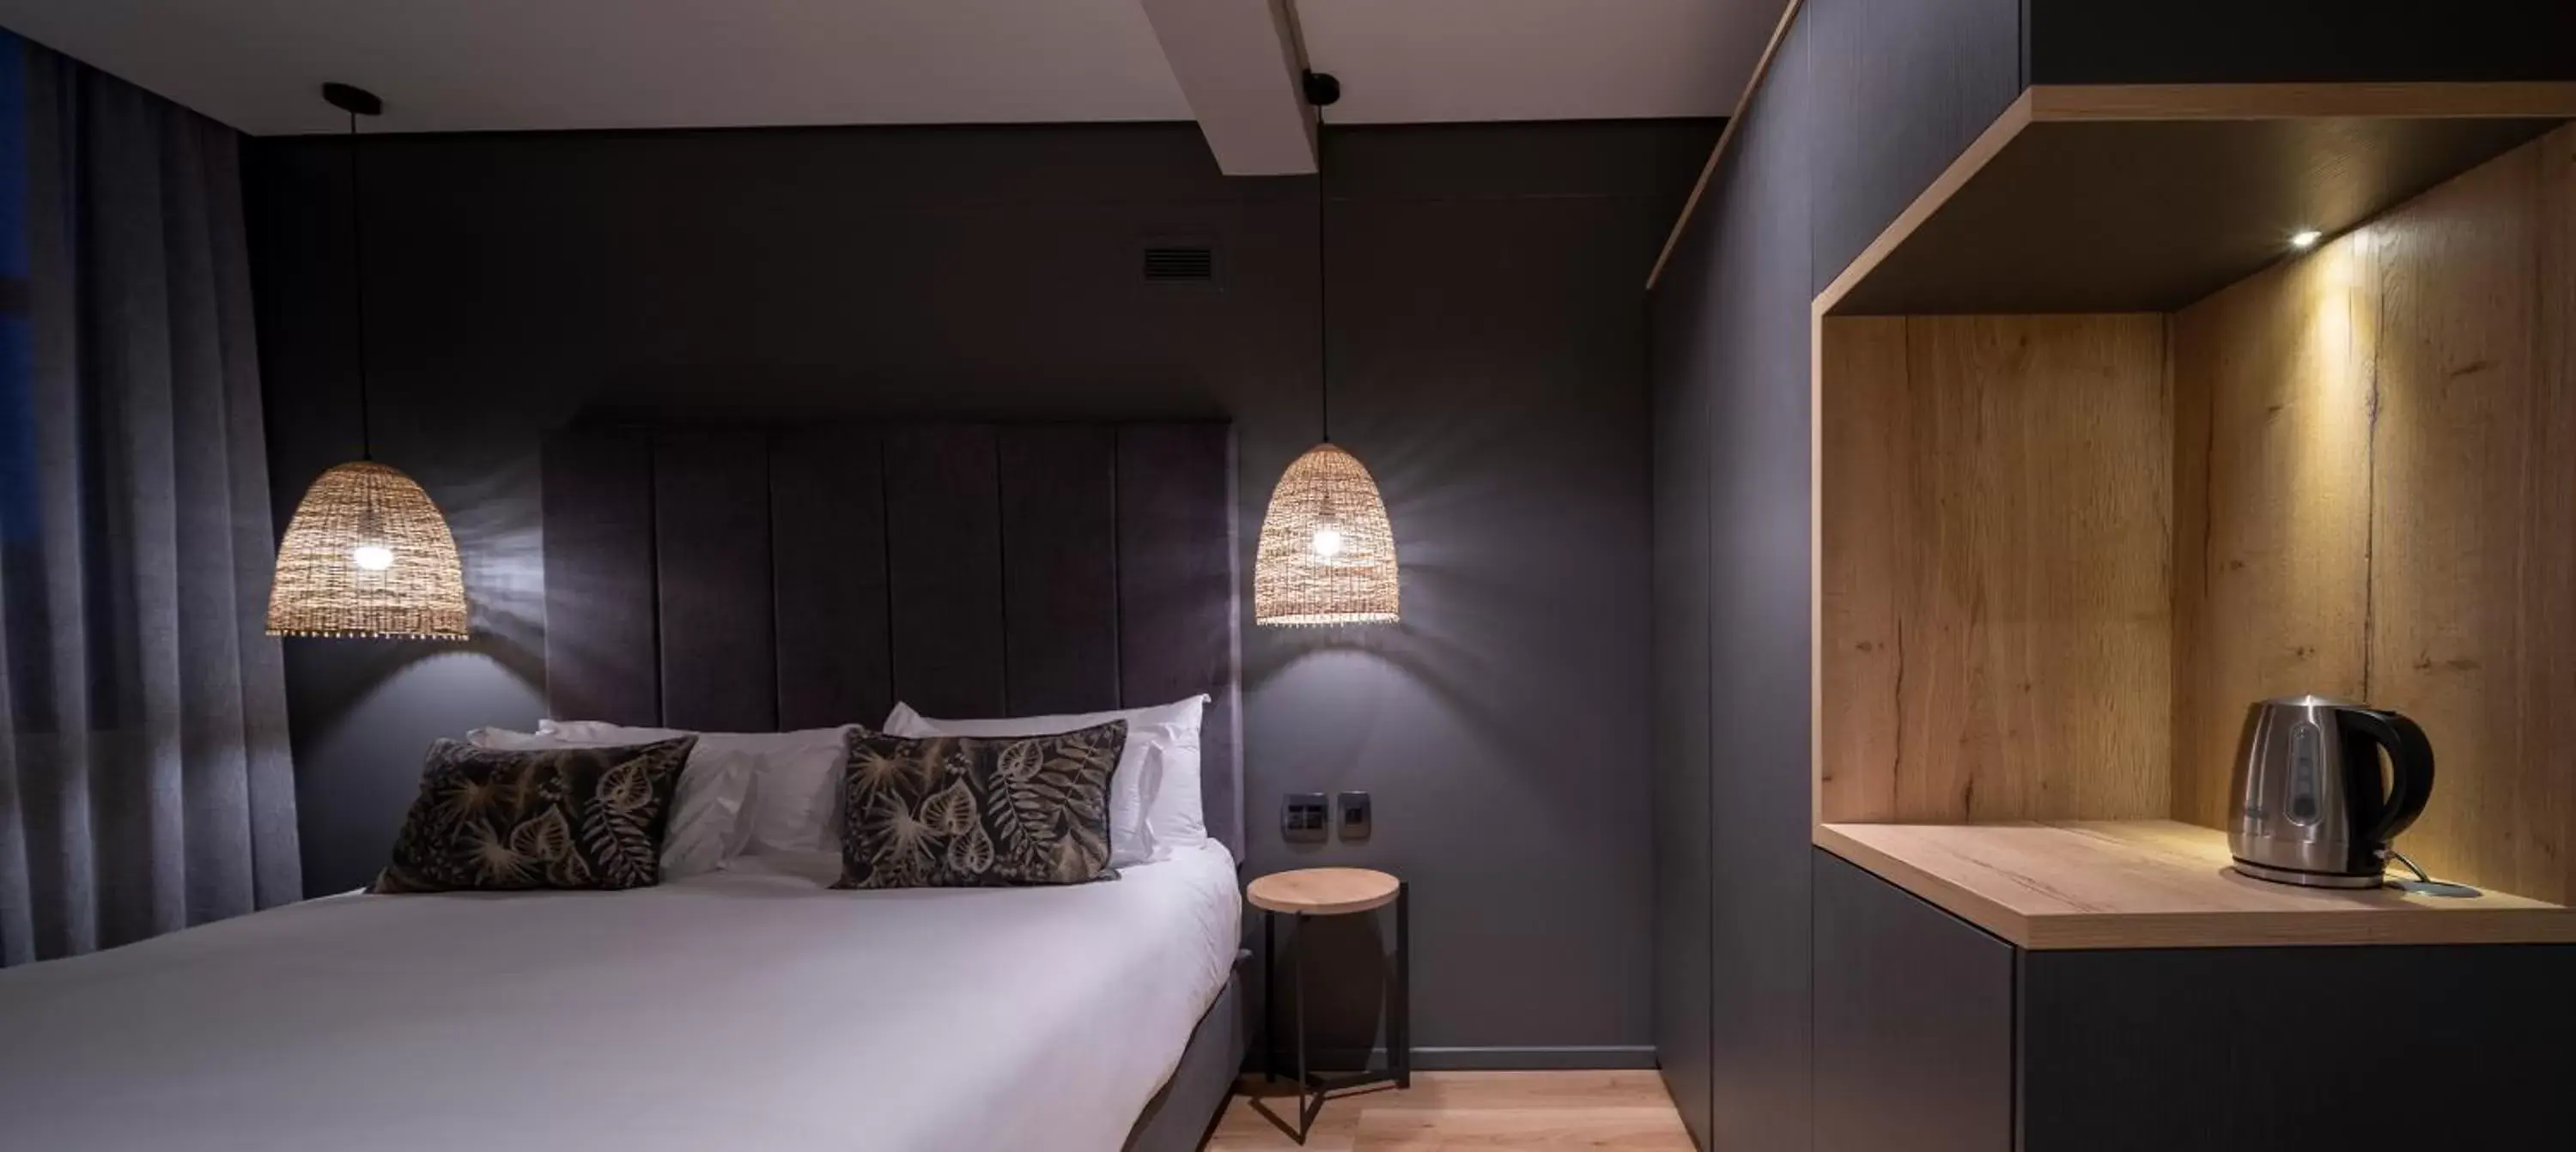 Bed in Kloof Street Hotel - Lion Roars Hotels & Lodges